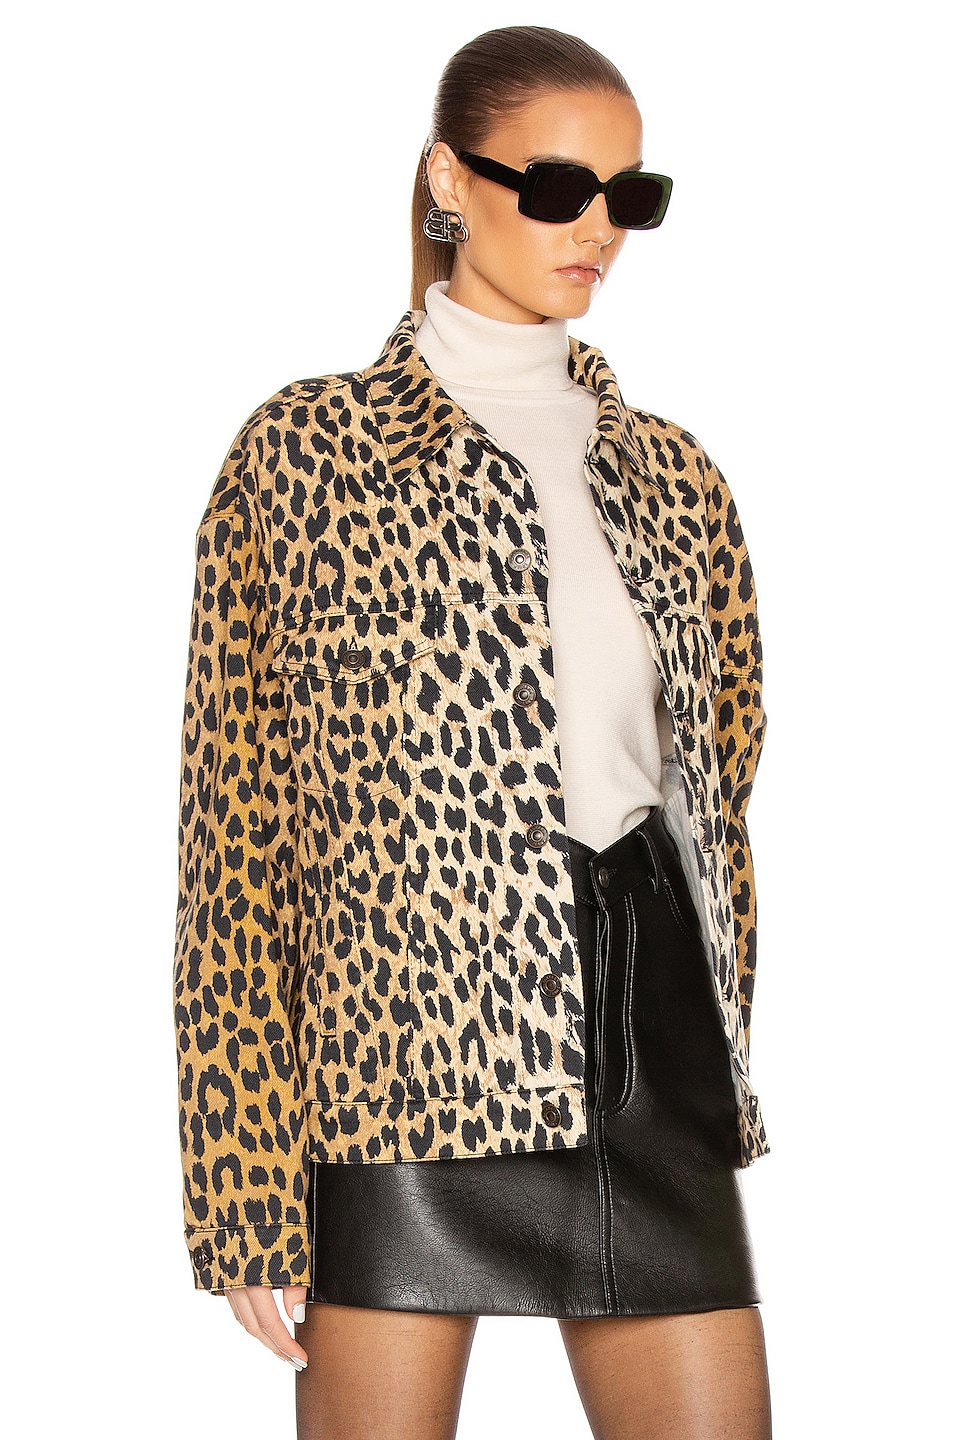 Balenciaga Denim Leopard Jacket in Beige | FWRD